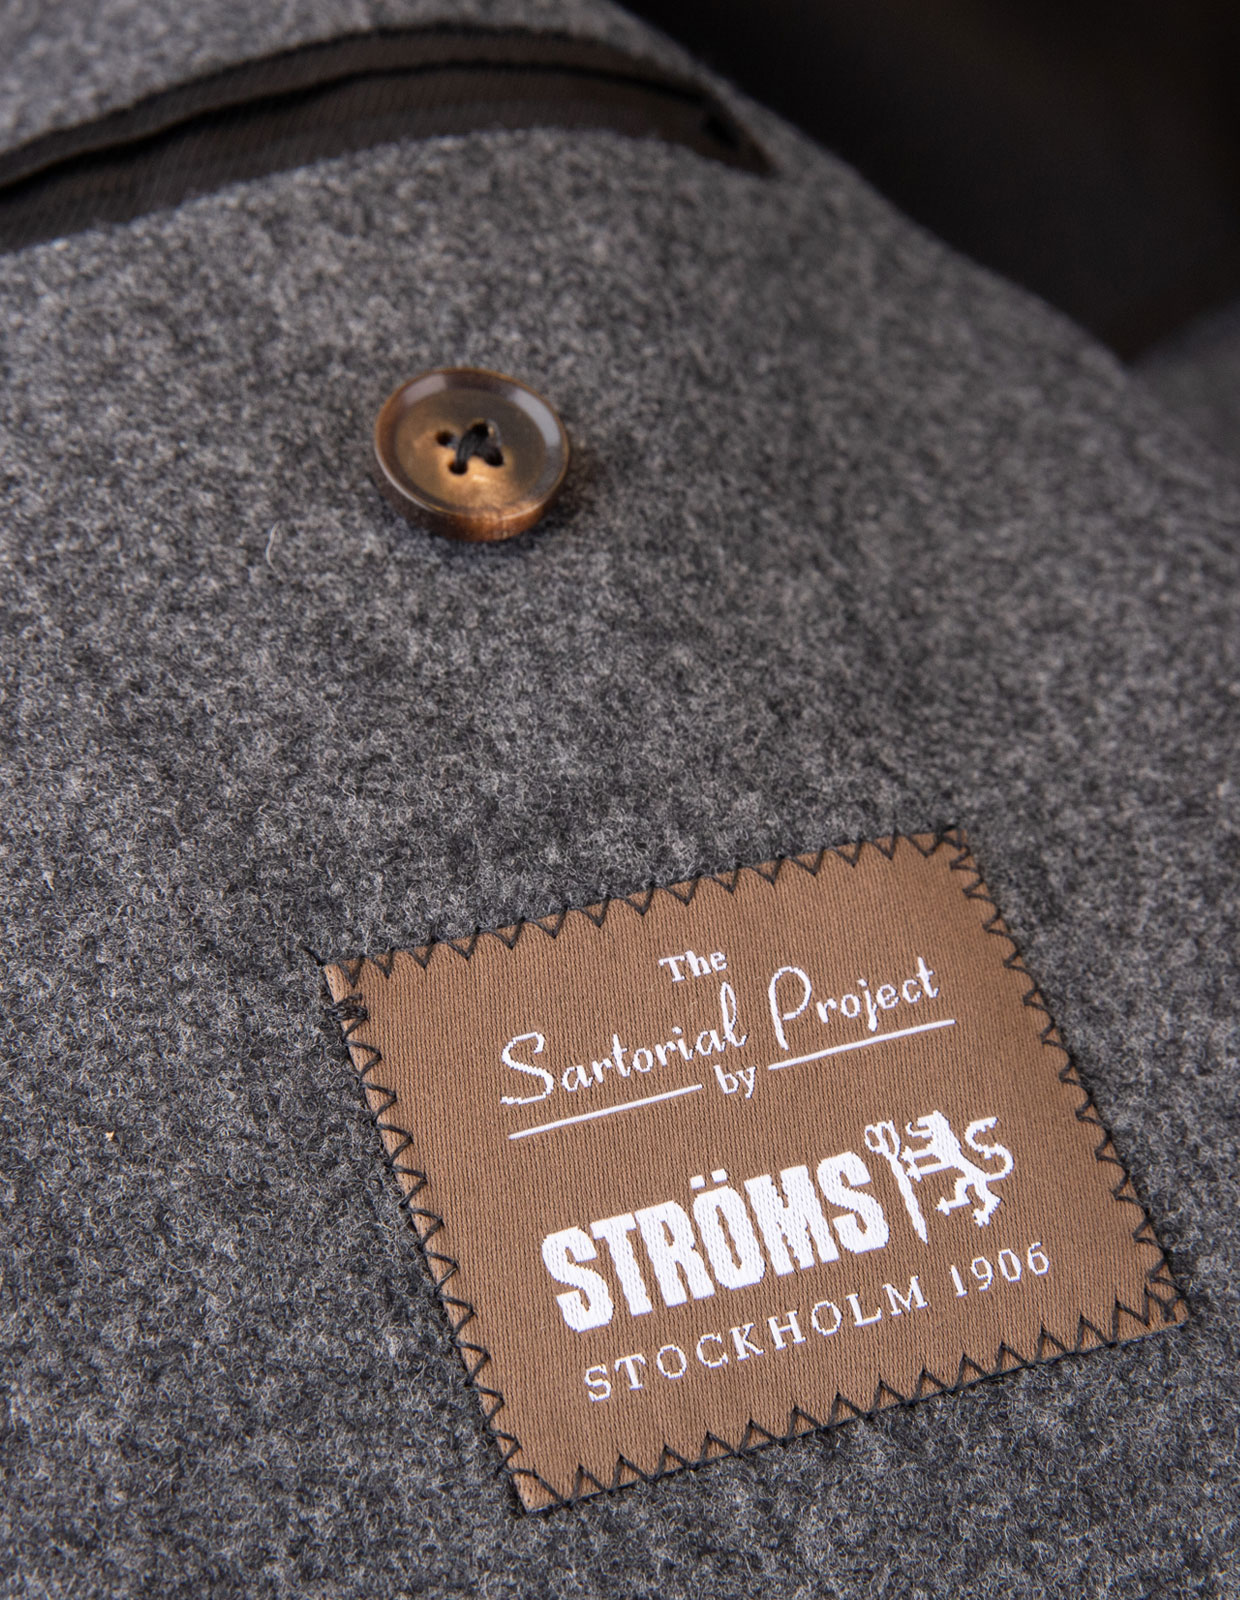 Sartorial Jacket Original Woollen Flannel Grey Stl 56